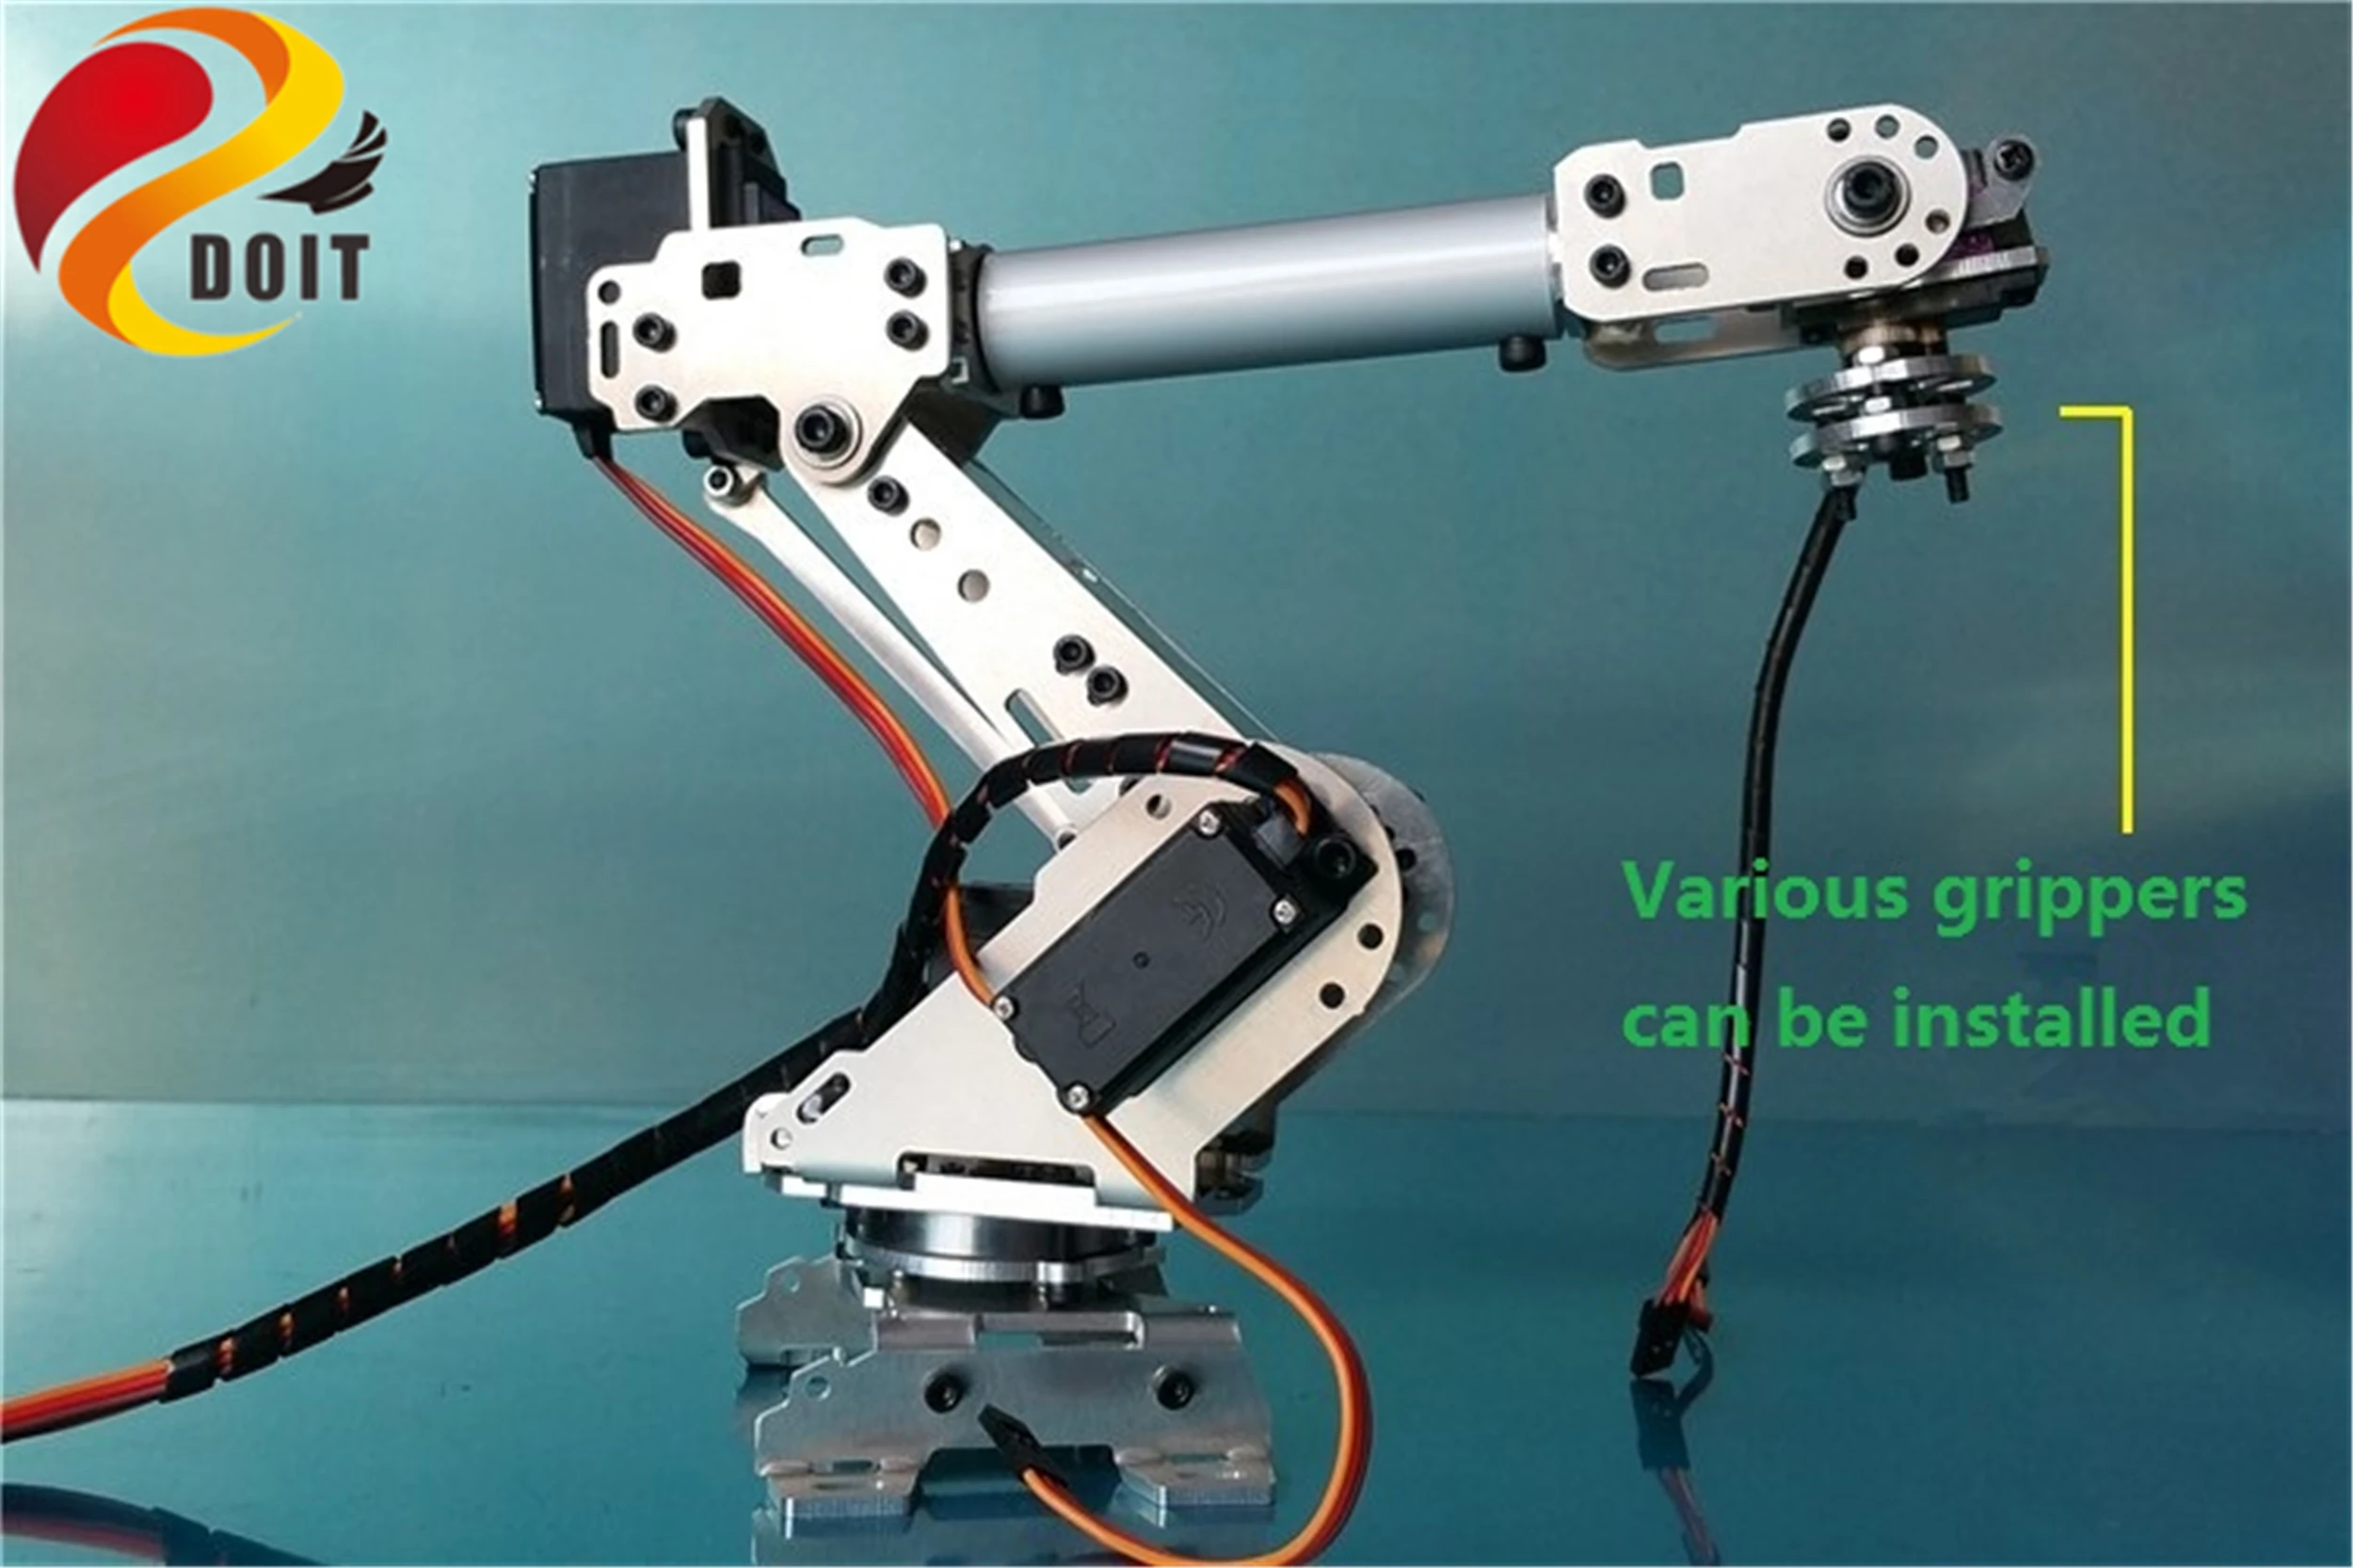 

SZDOIT Metal 6-Axis Robot Arm With 6pcs Servos 6DOF ABB Industrial Robotic Model DIY For Arduino